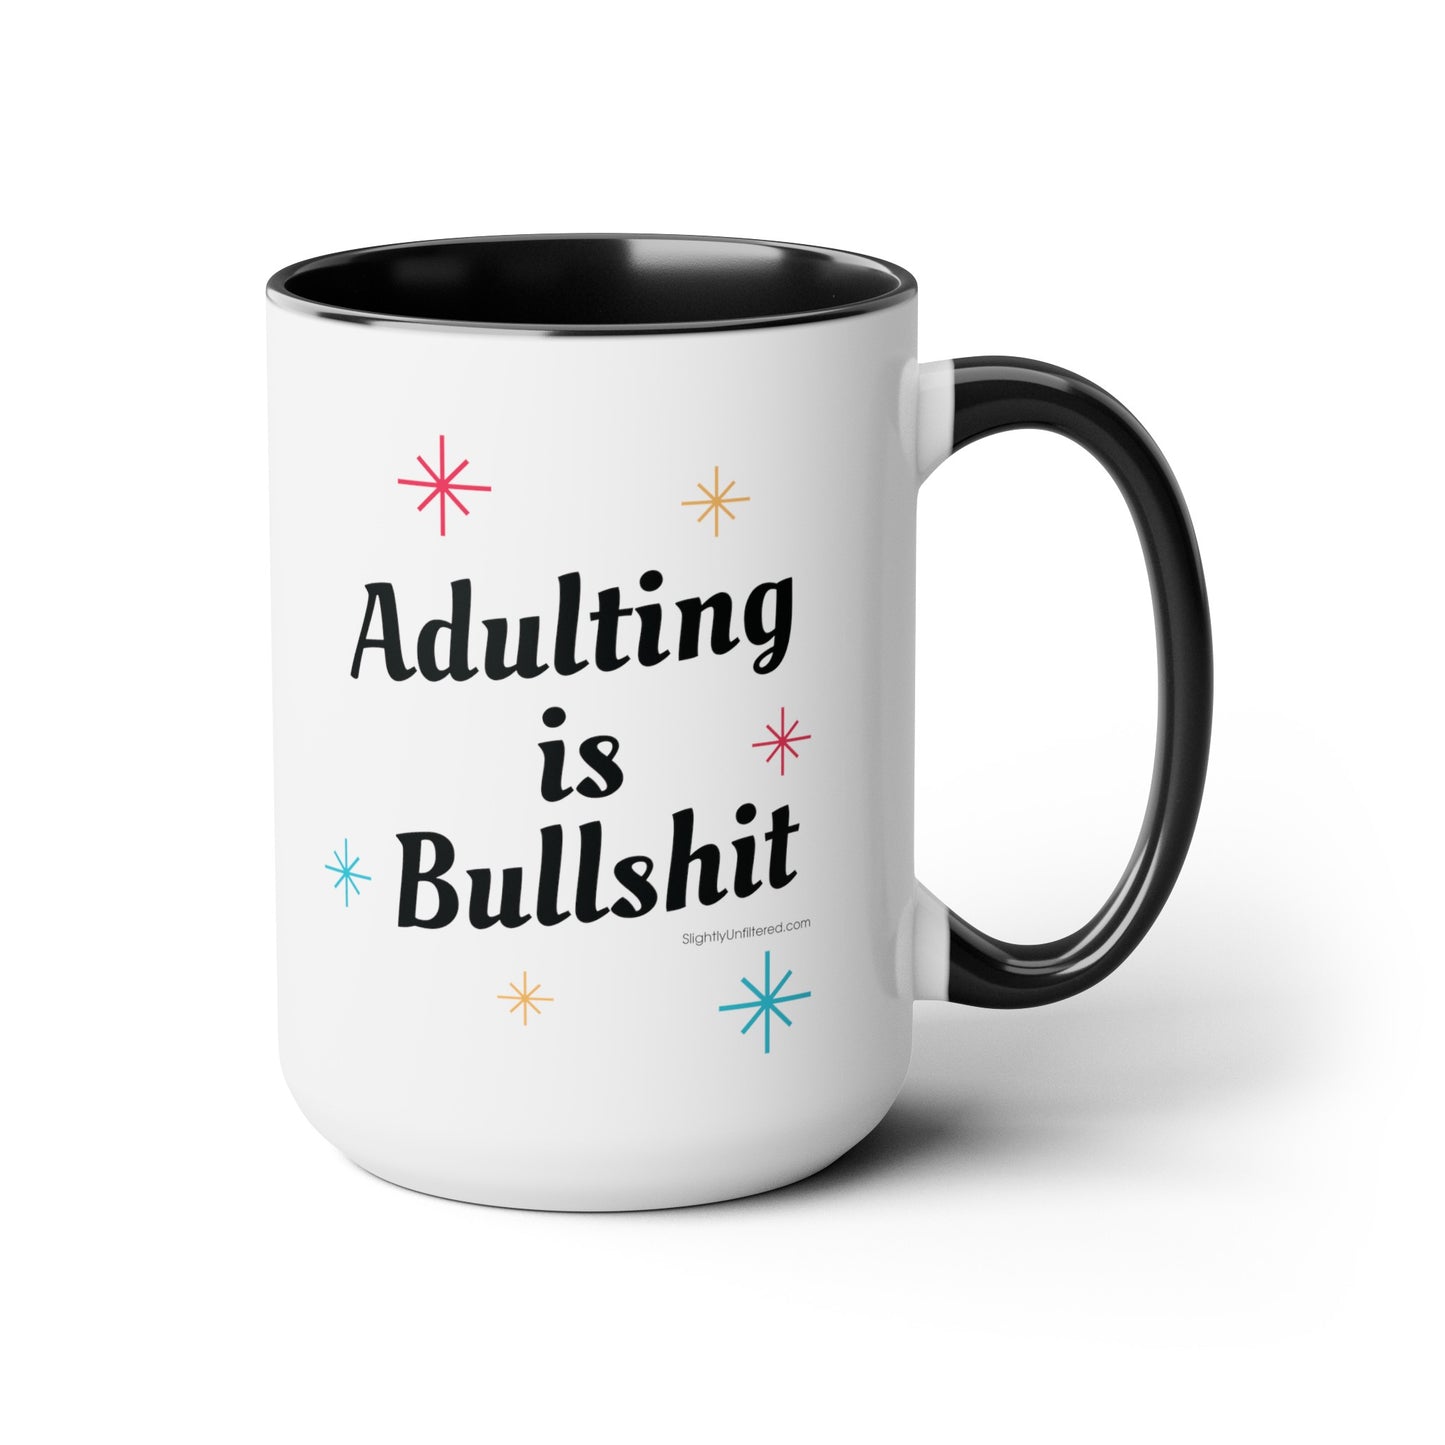 Adulting is Bullshit Mug - 15oz.